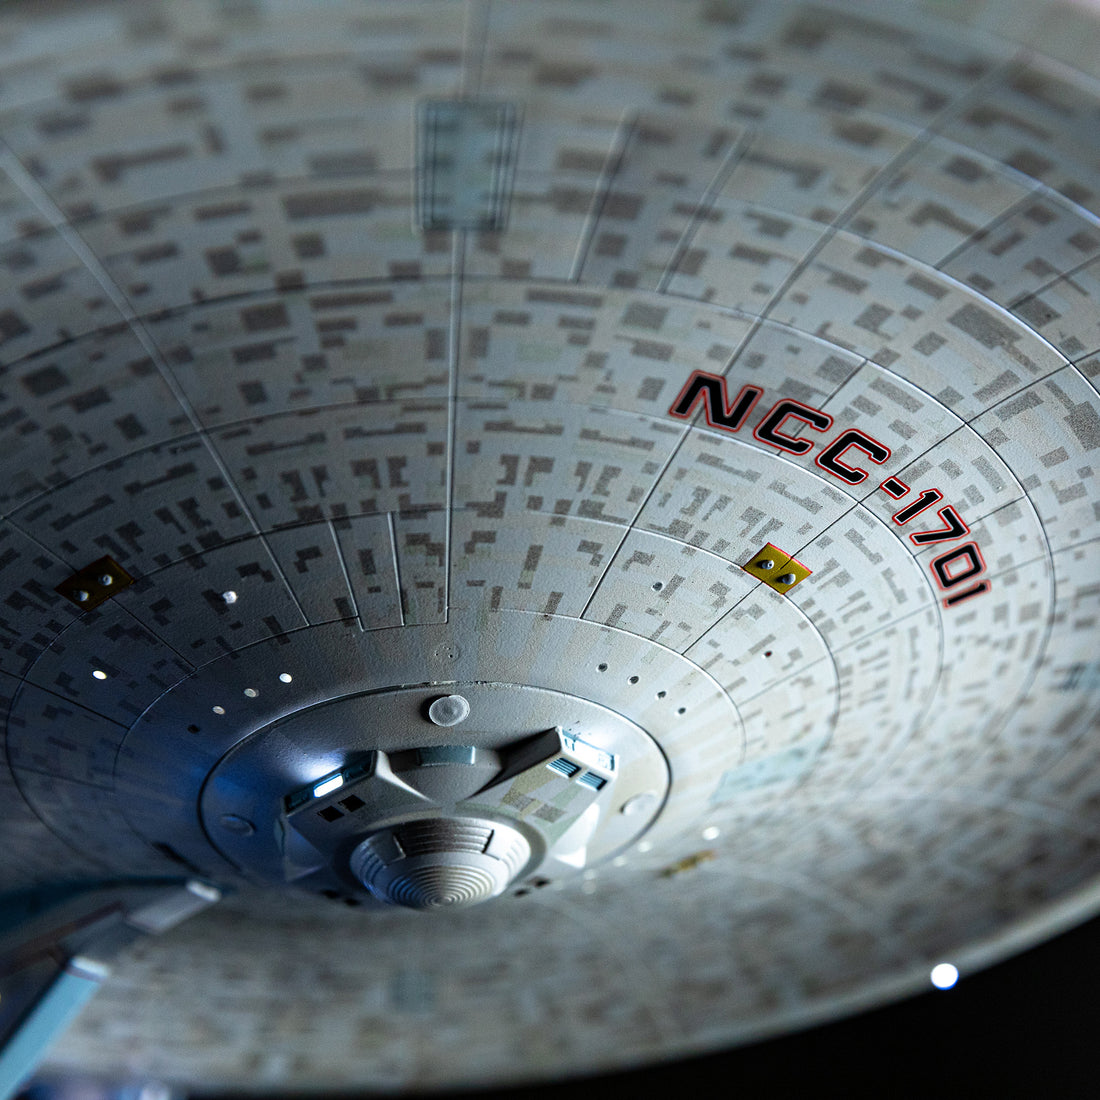 Star Trek | U.S.S. Enterprise NCC-1701 Star Trek: The Motion Picture Version